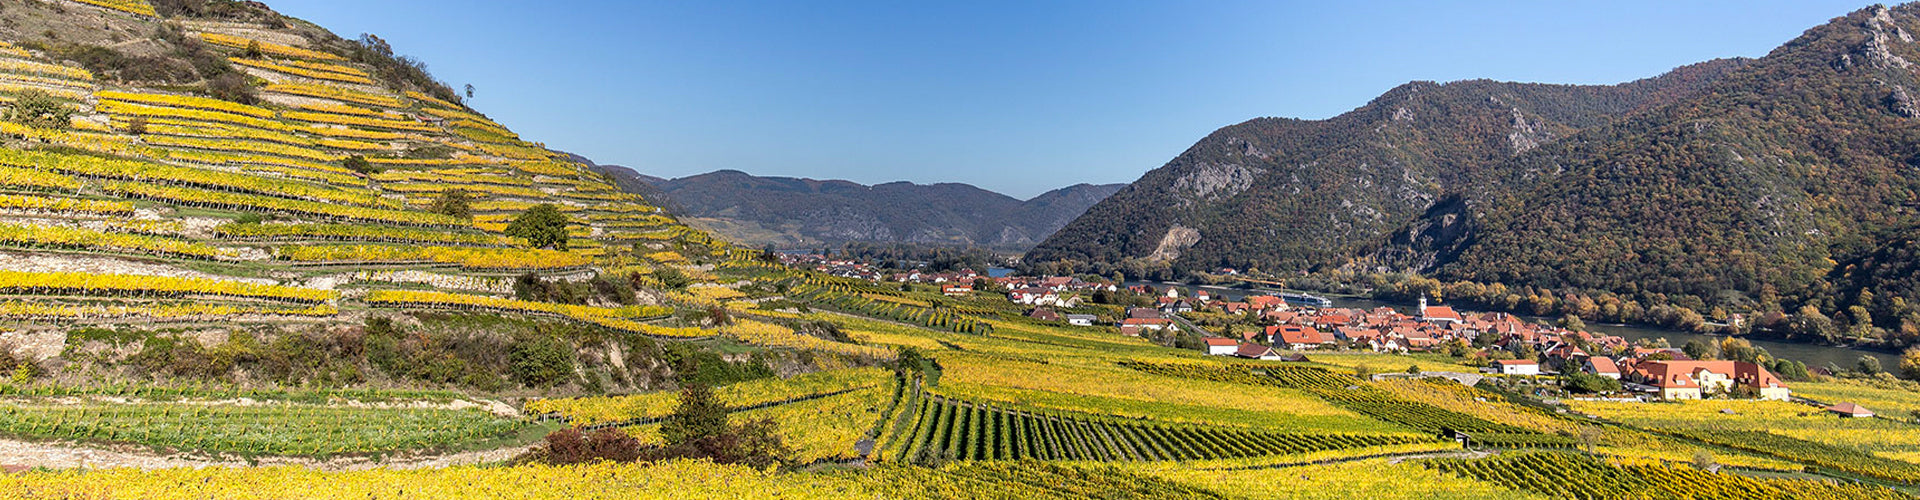 Rudi Pichler Vineyards in the Wachau region of Austria